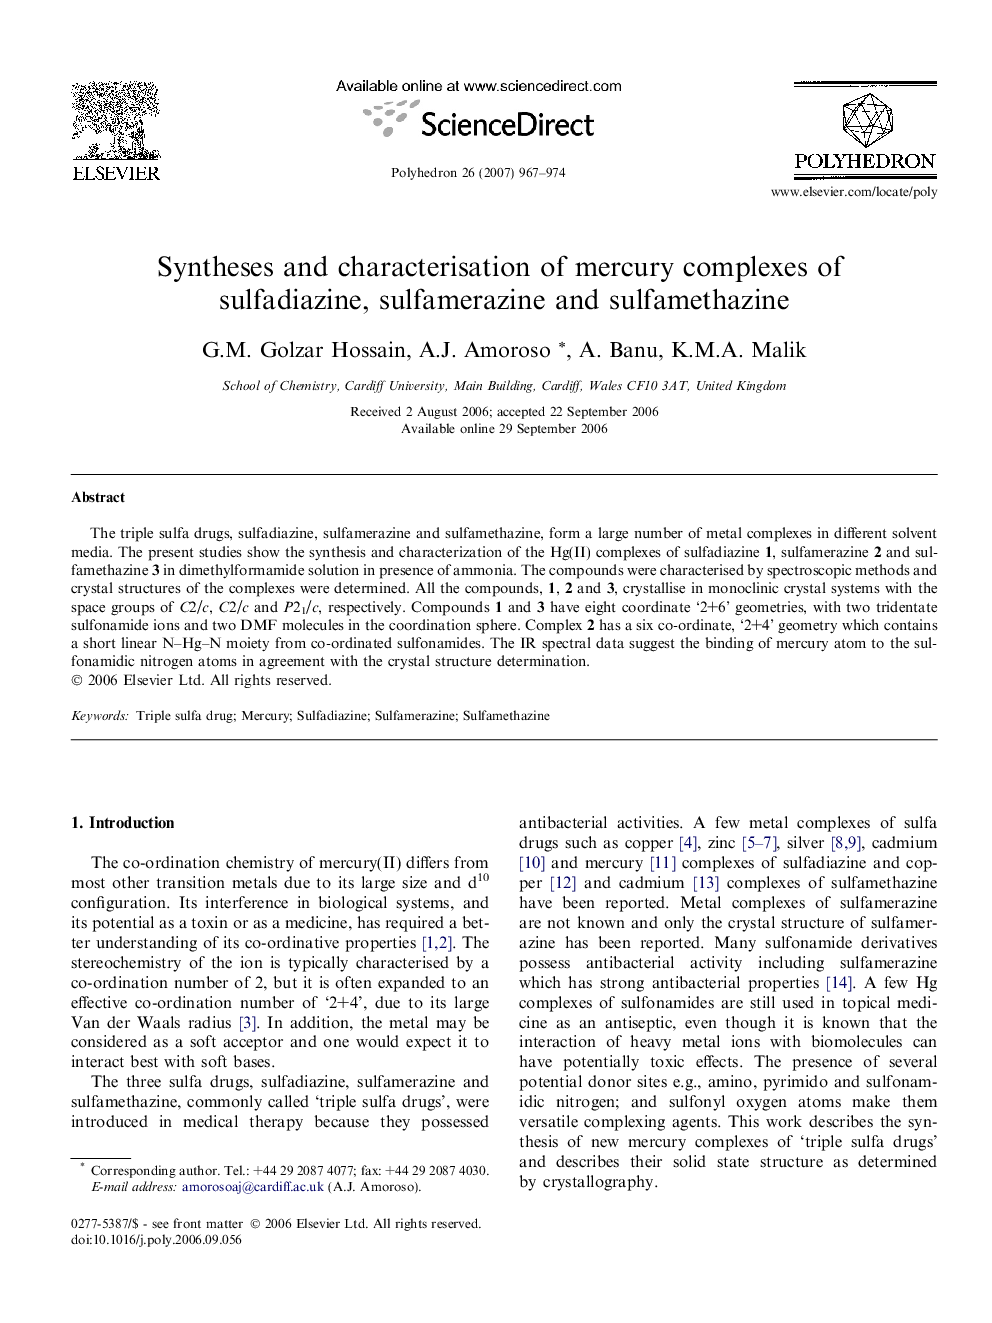 Syntheses and characterisation of mercury complexes of sulfadiazine, sulfamerazine and sulfamethazine